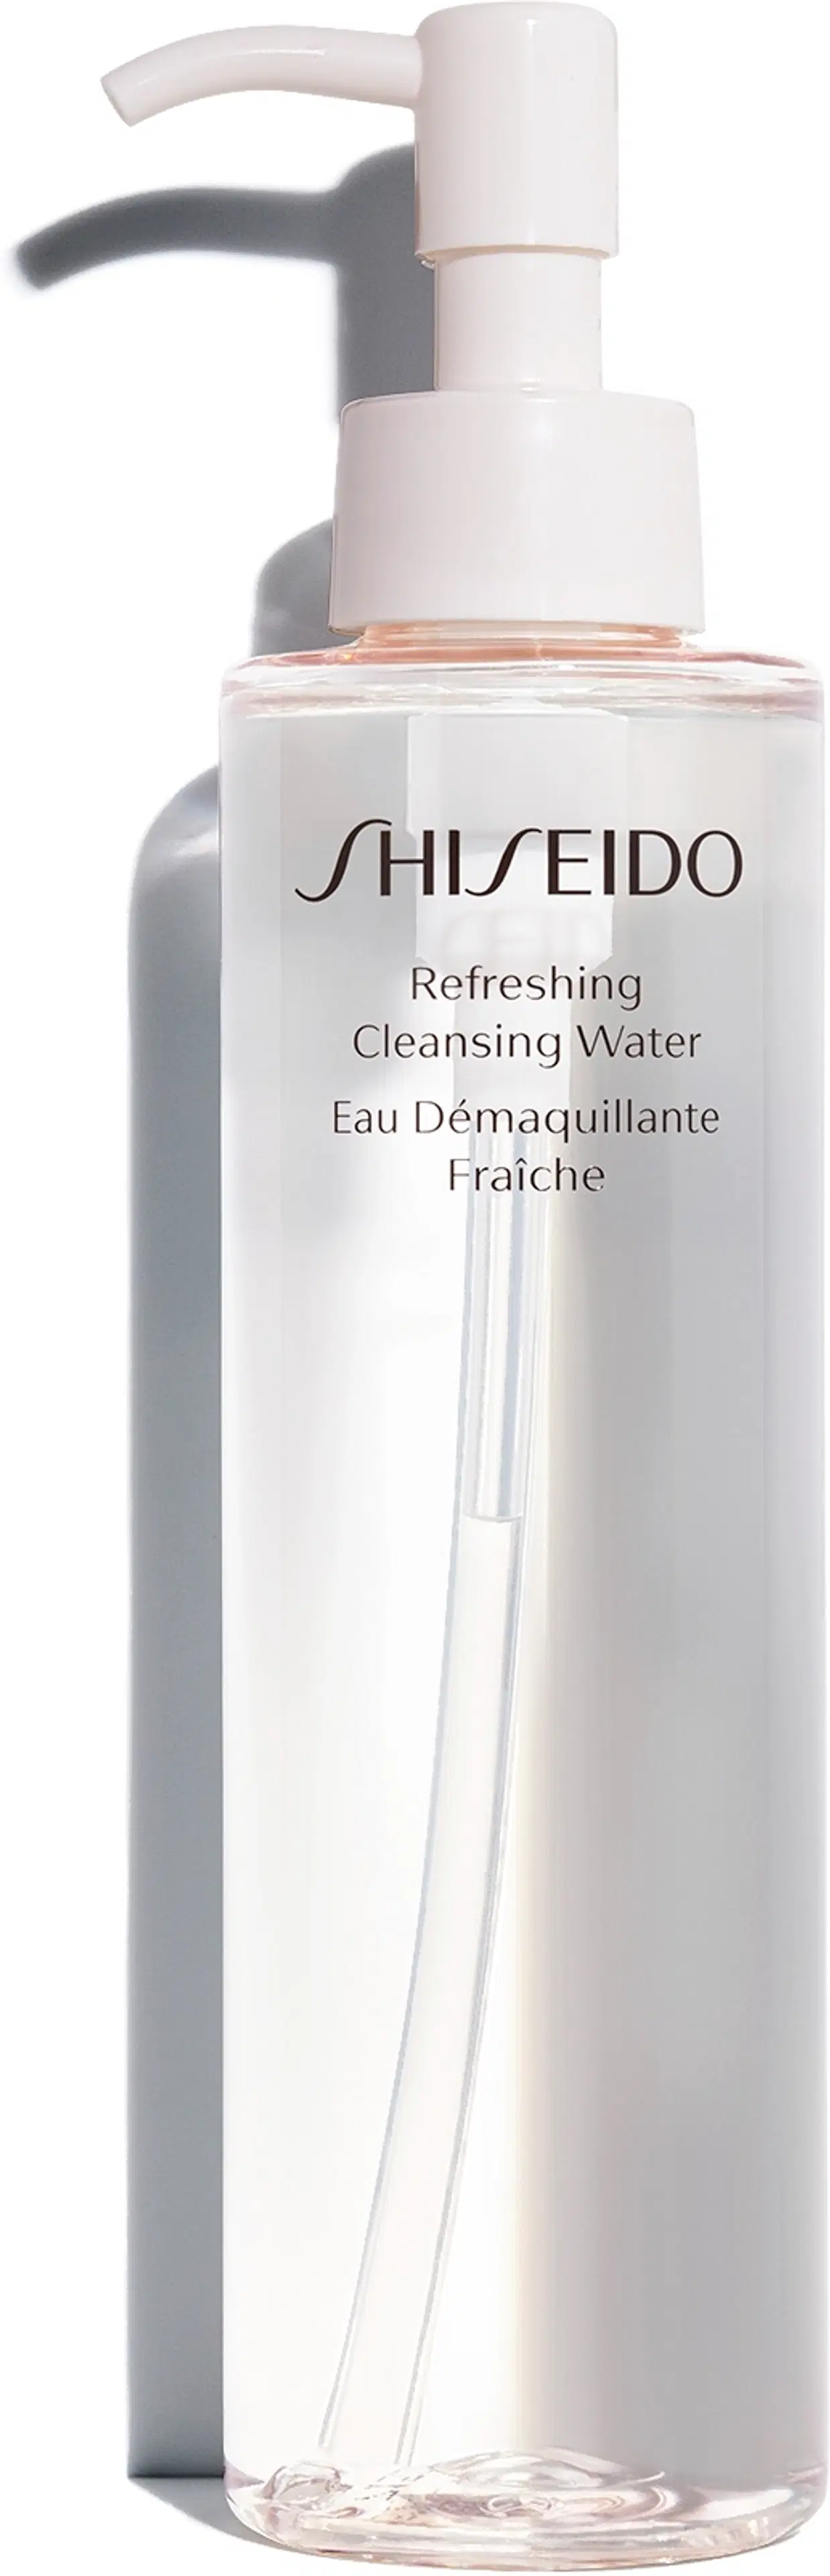 Shiseido Refreshing Cleansing Water puhdistusvesi 180 ml